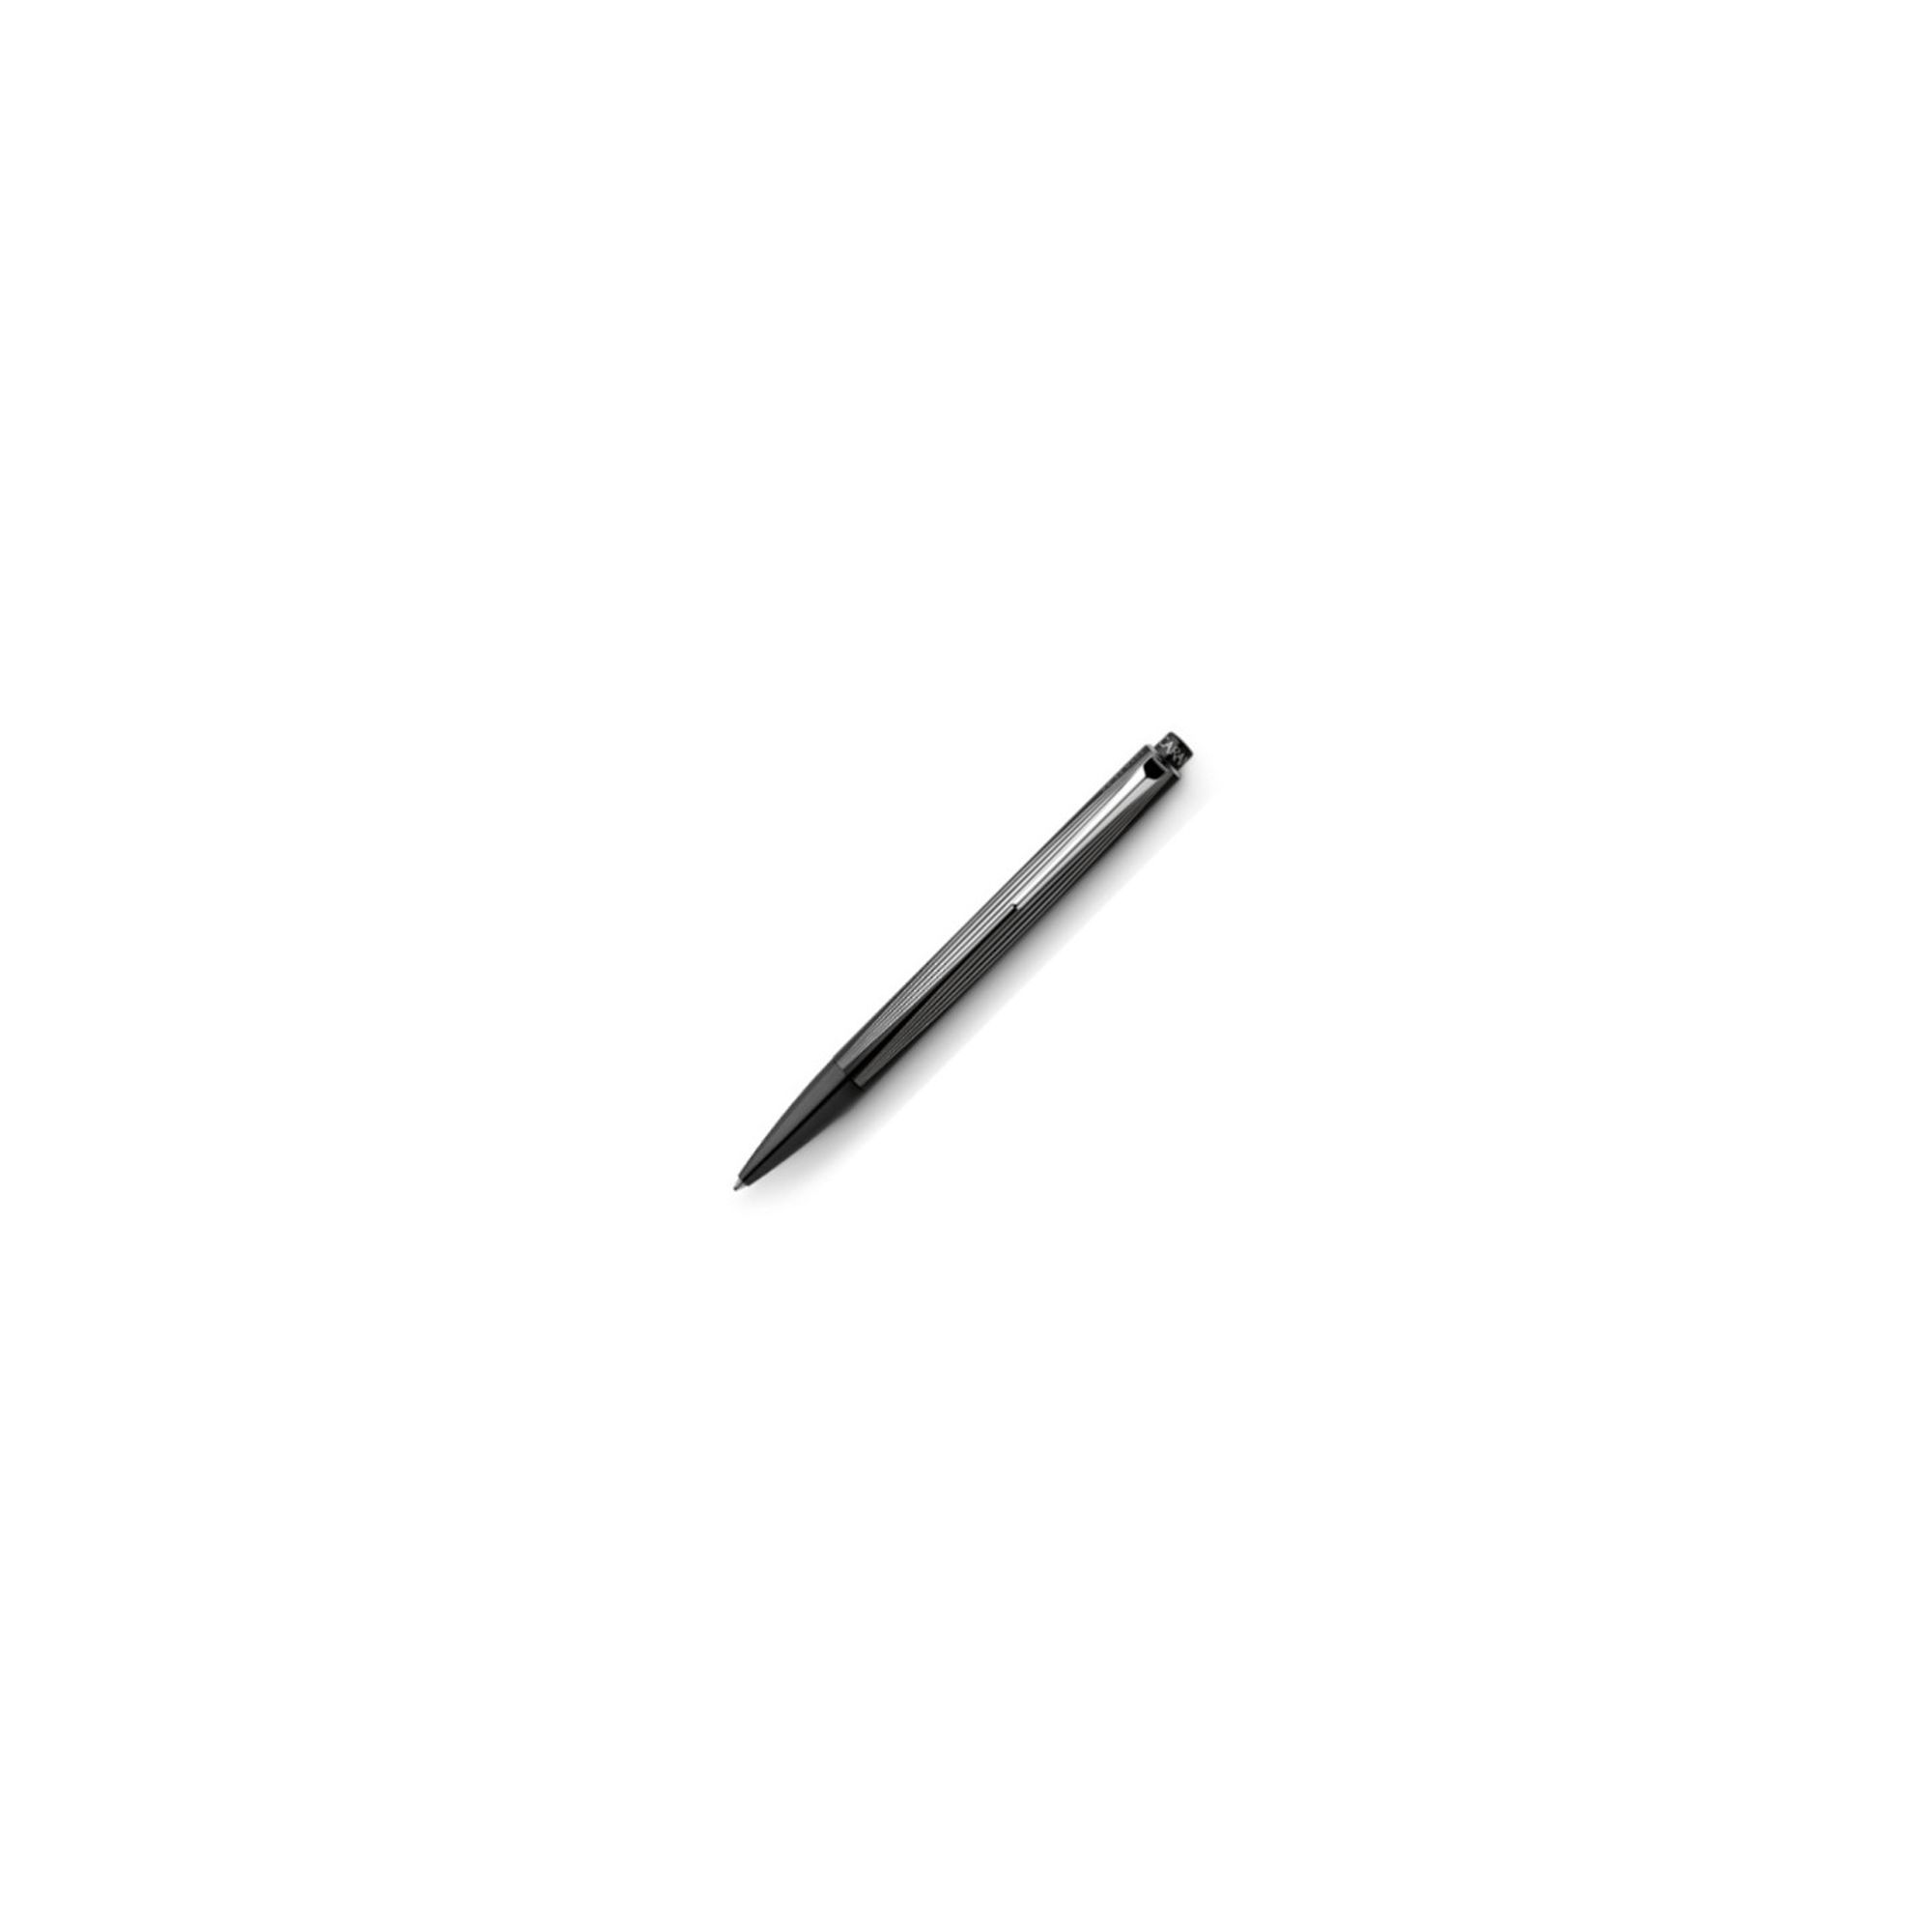 Caran d'Ache RNX316 PVD Black Ballpoint Pen at Tesco Direct